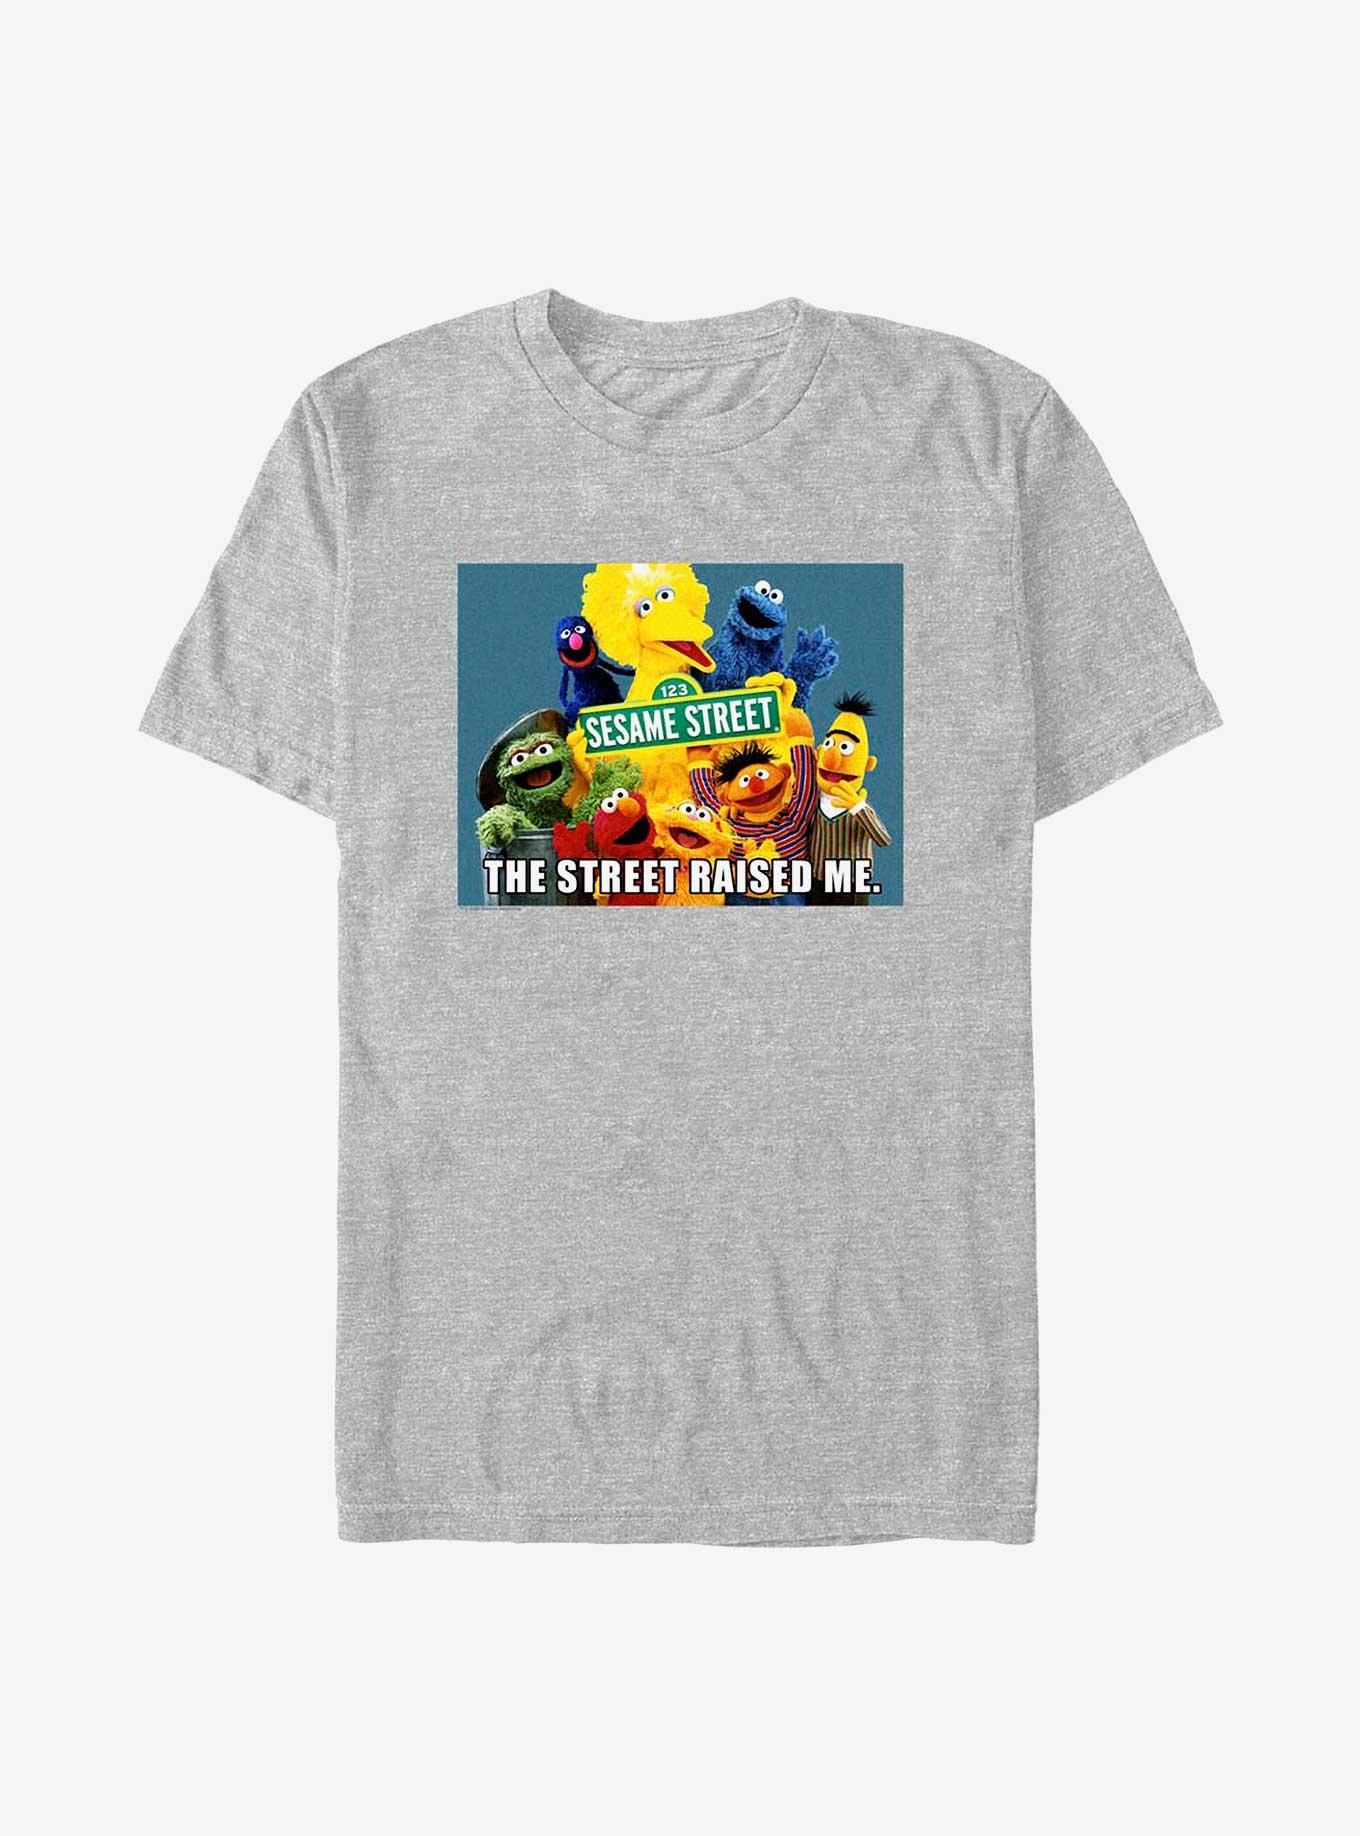 Sesame Street Raised Me T-Shirt